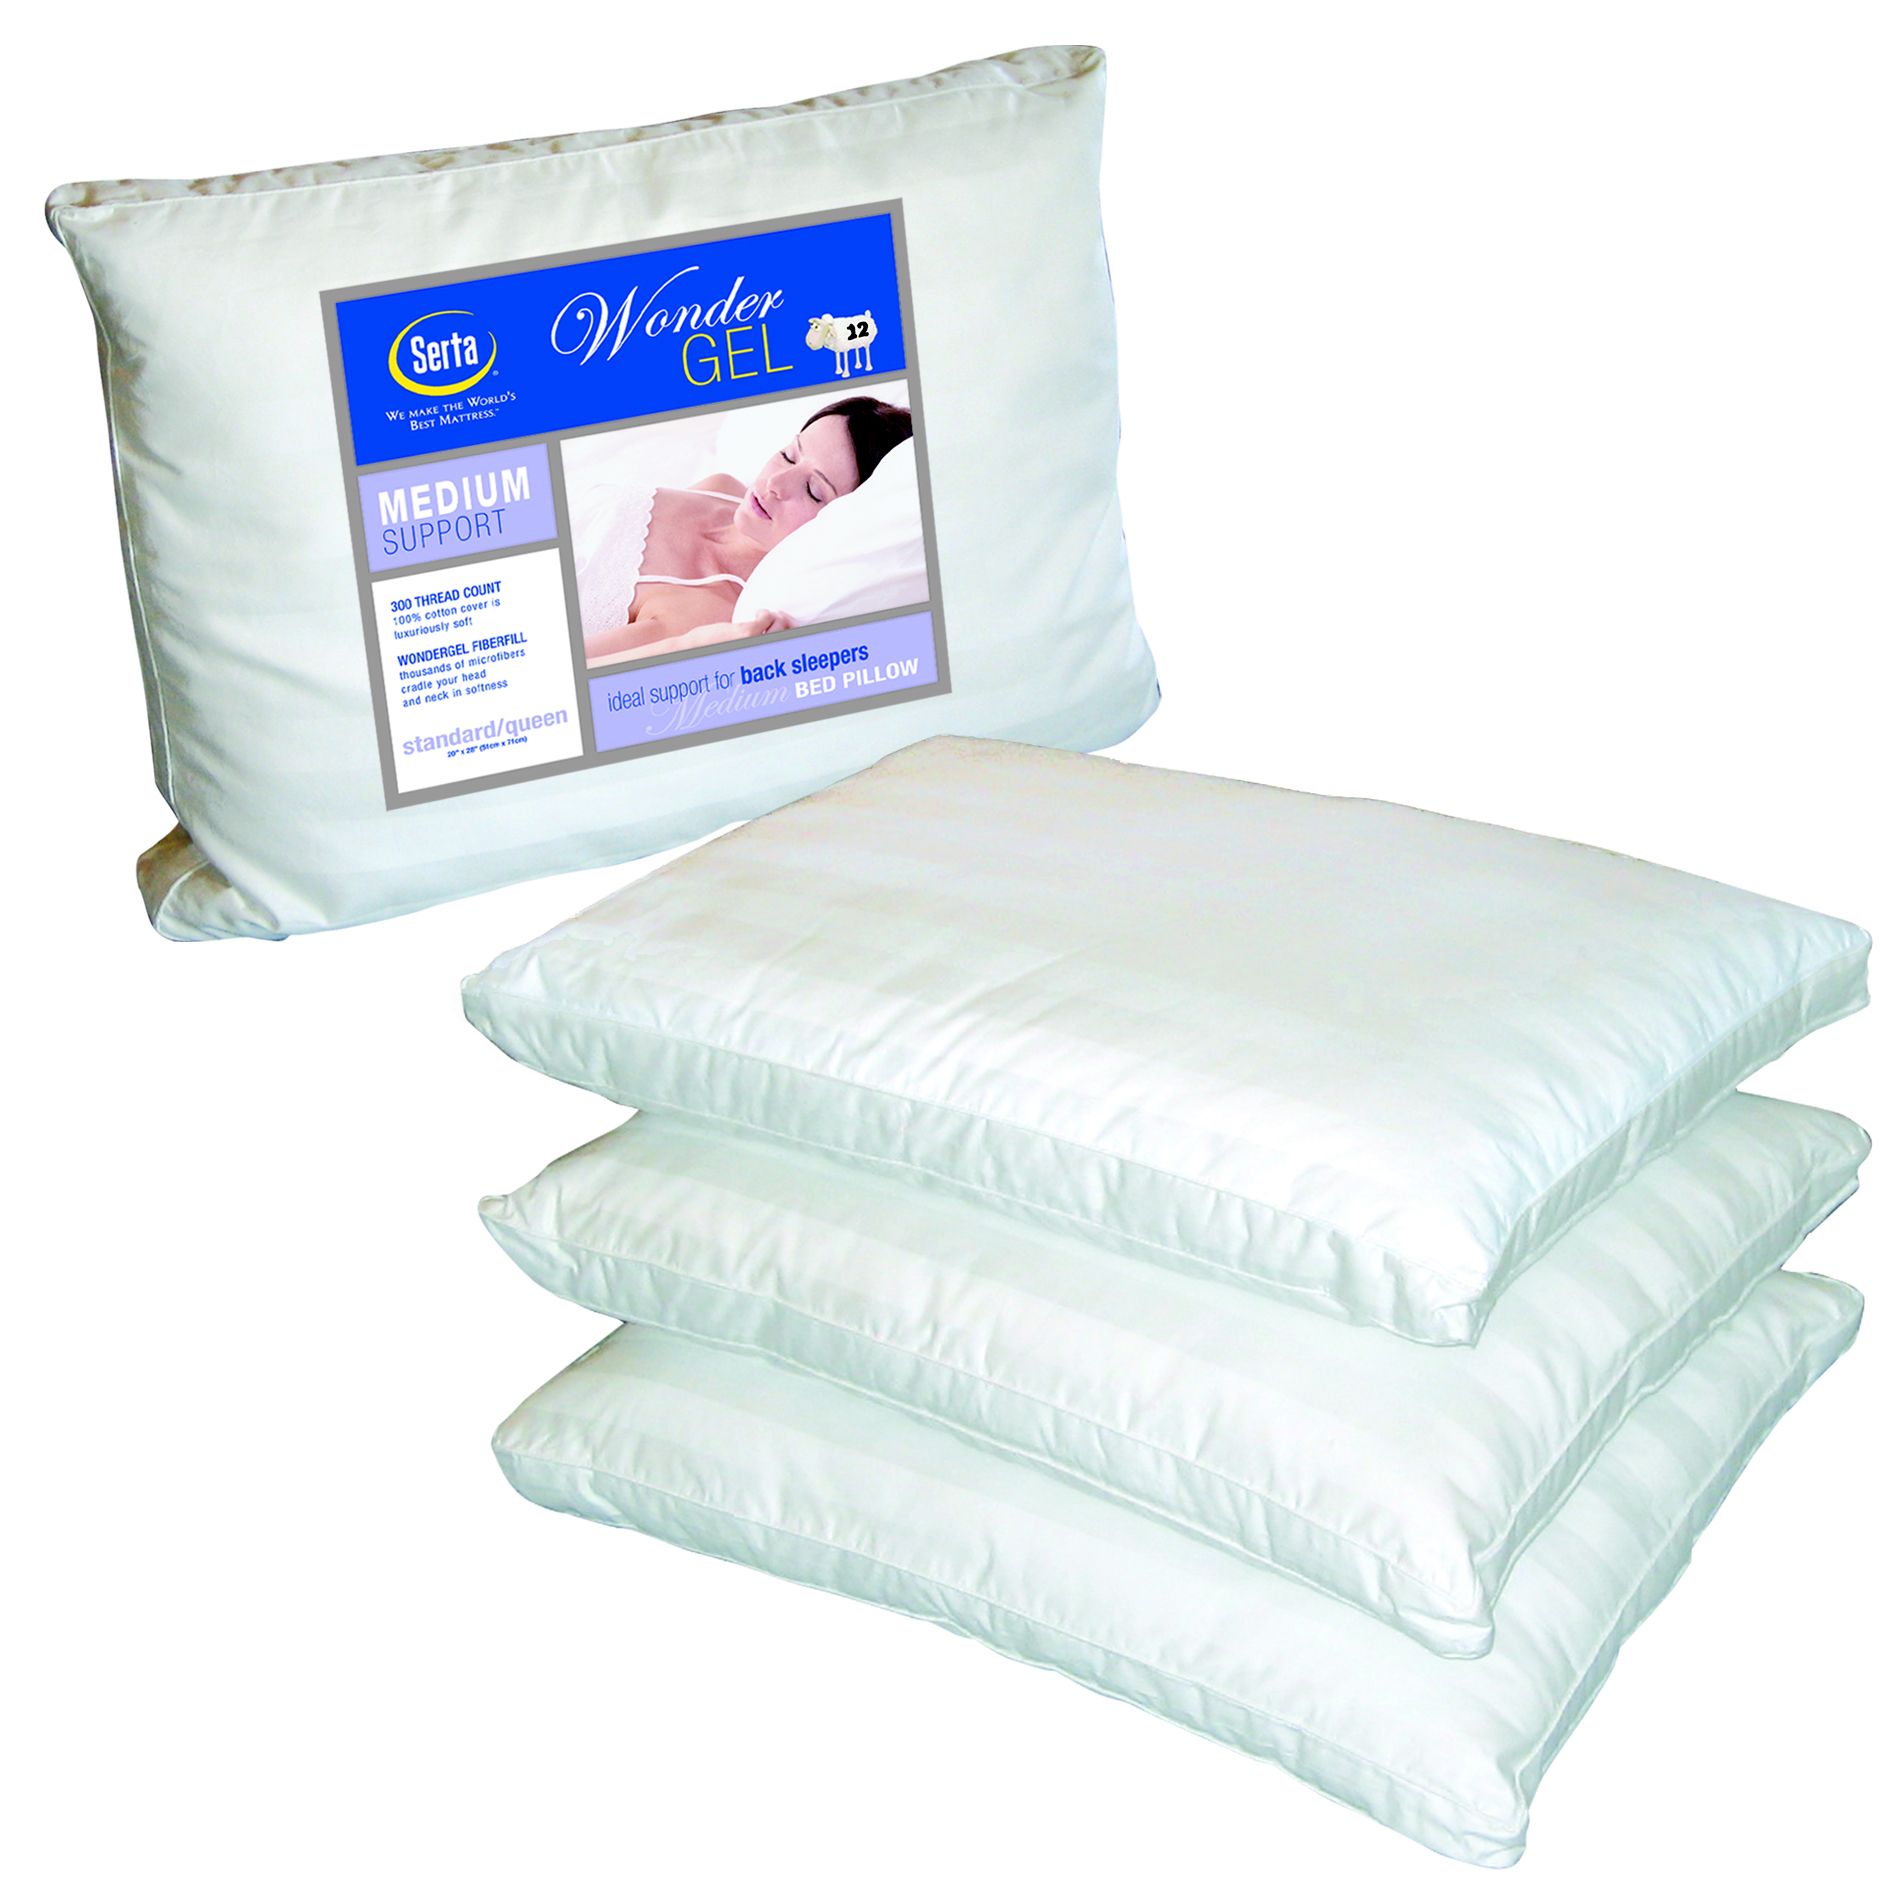 Serta Standard Gel Pillow - Medium